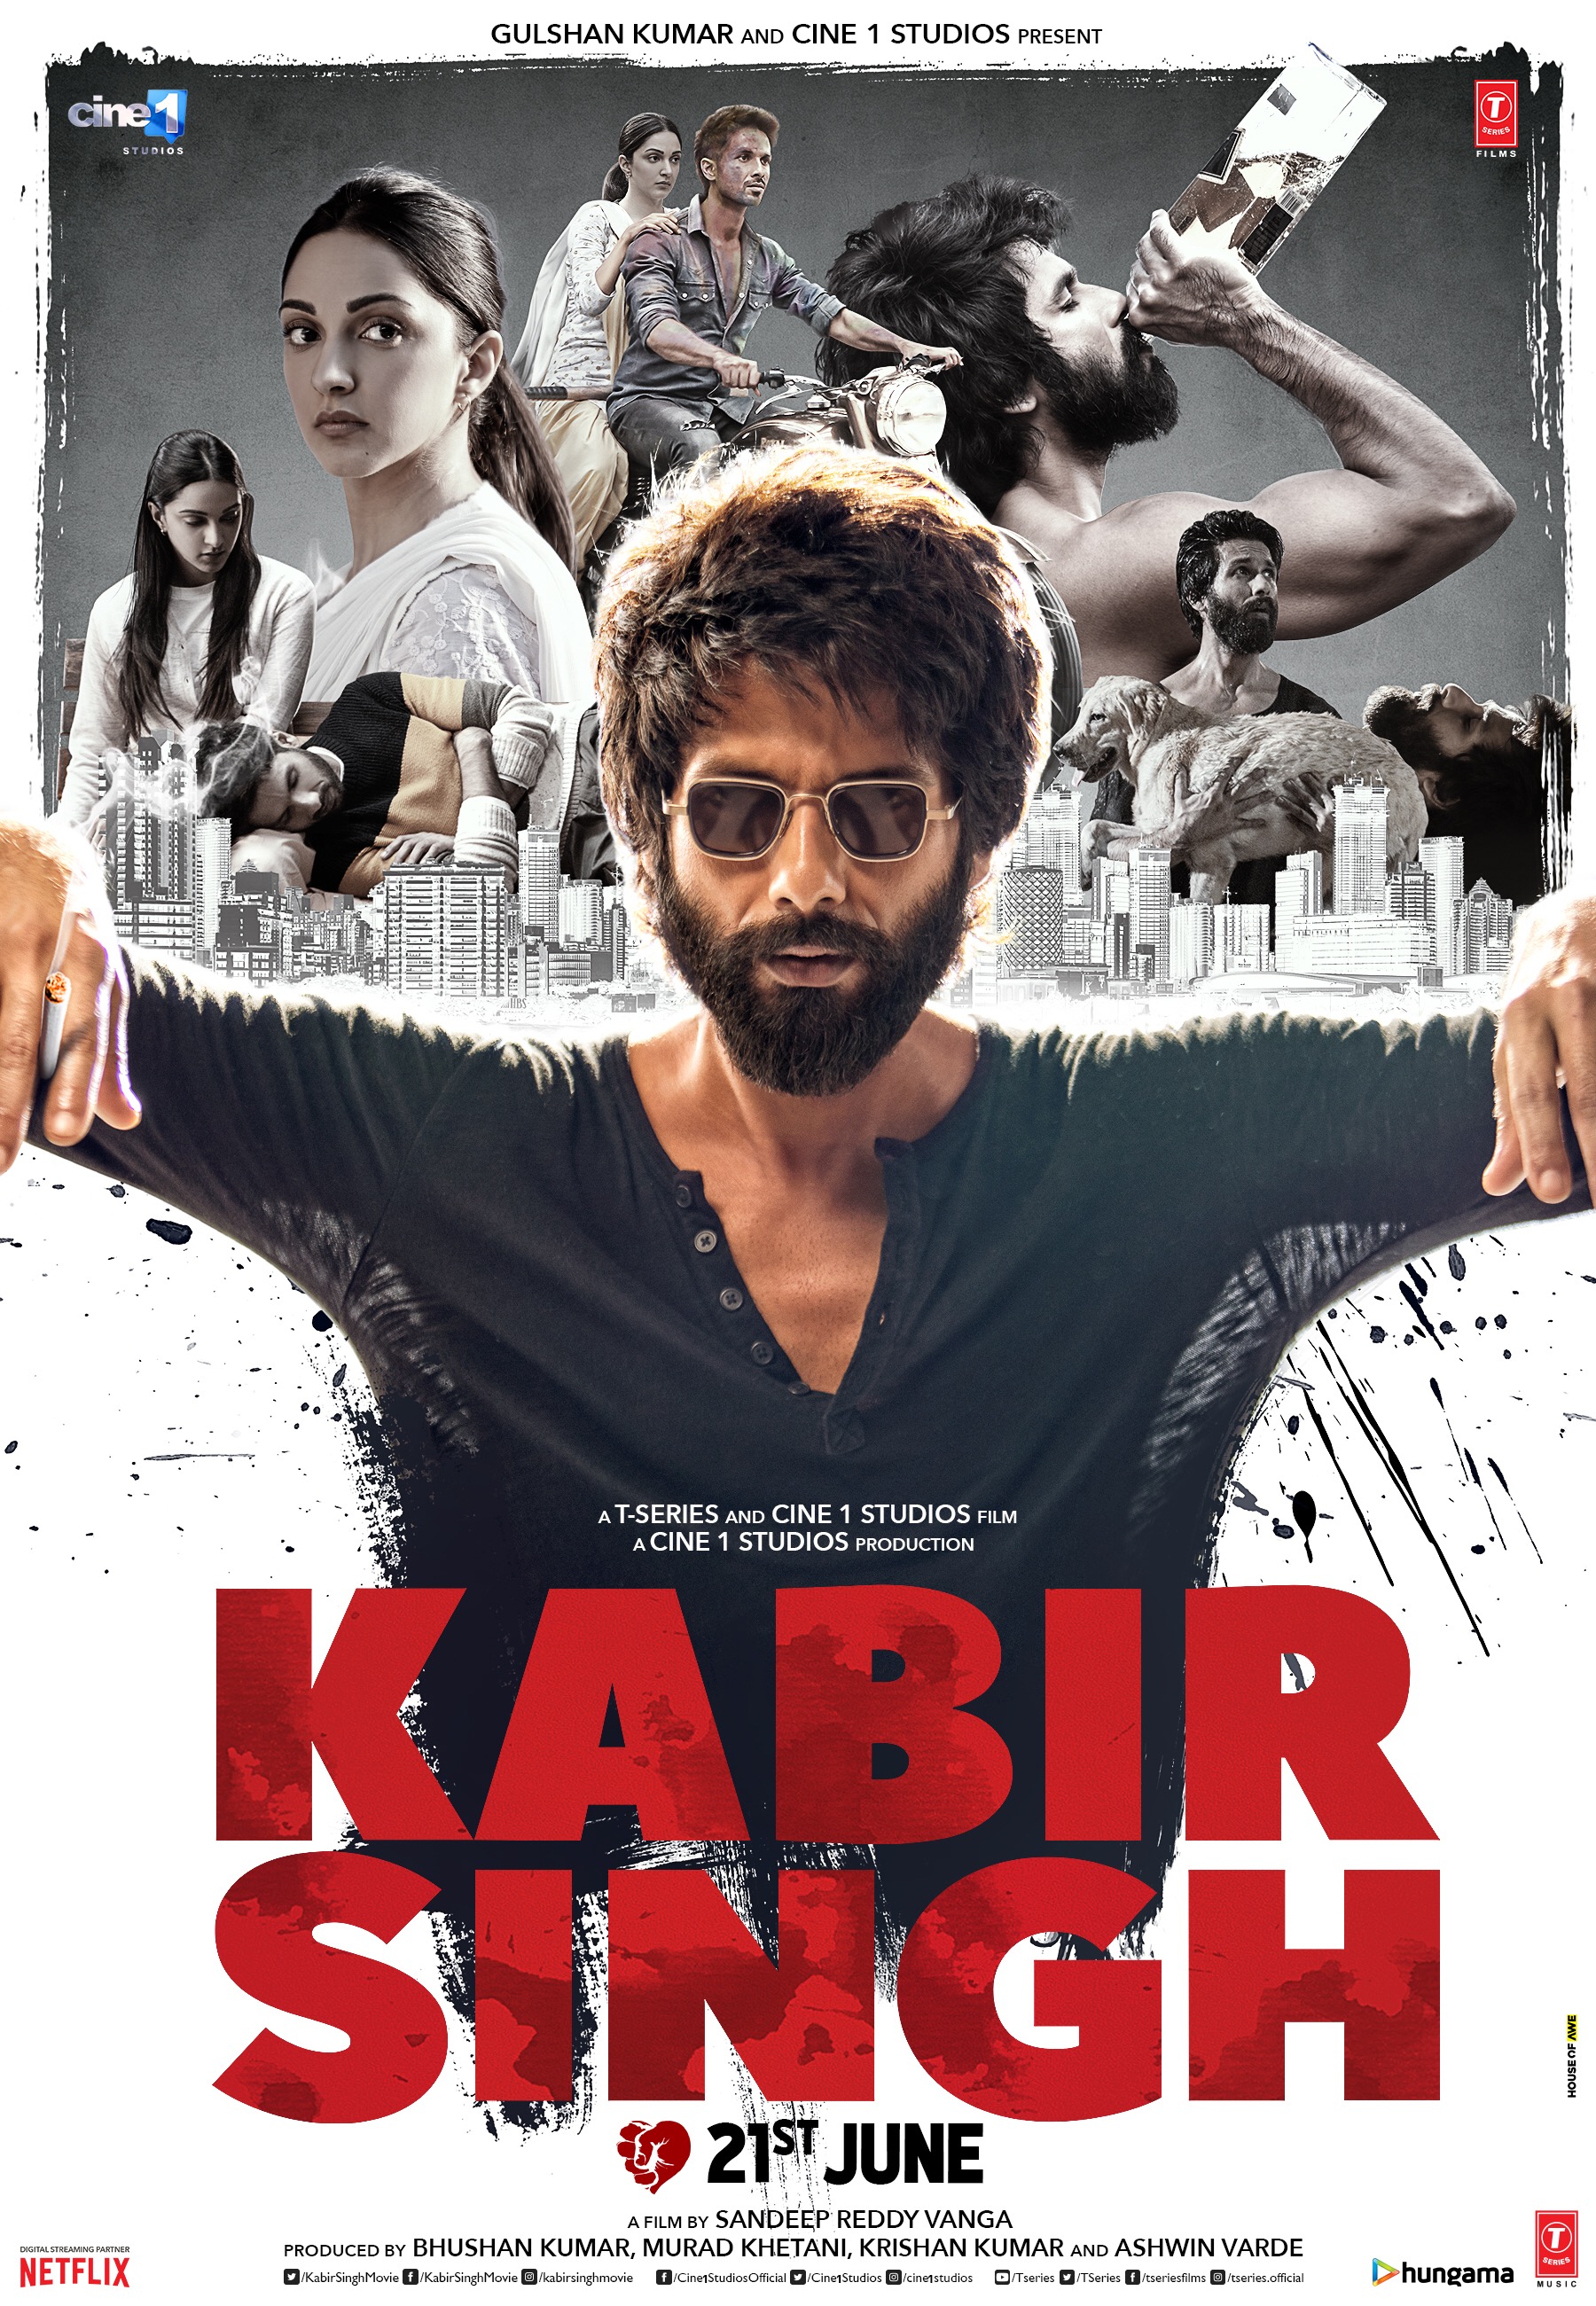 Shahid Kapoor on the poster of Kabir Singh